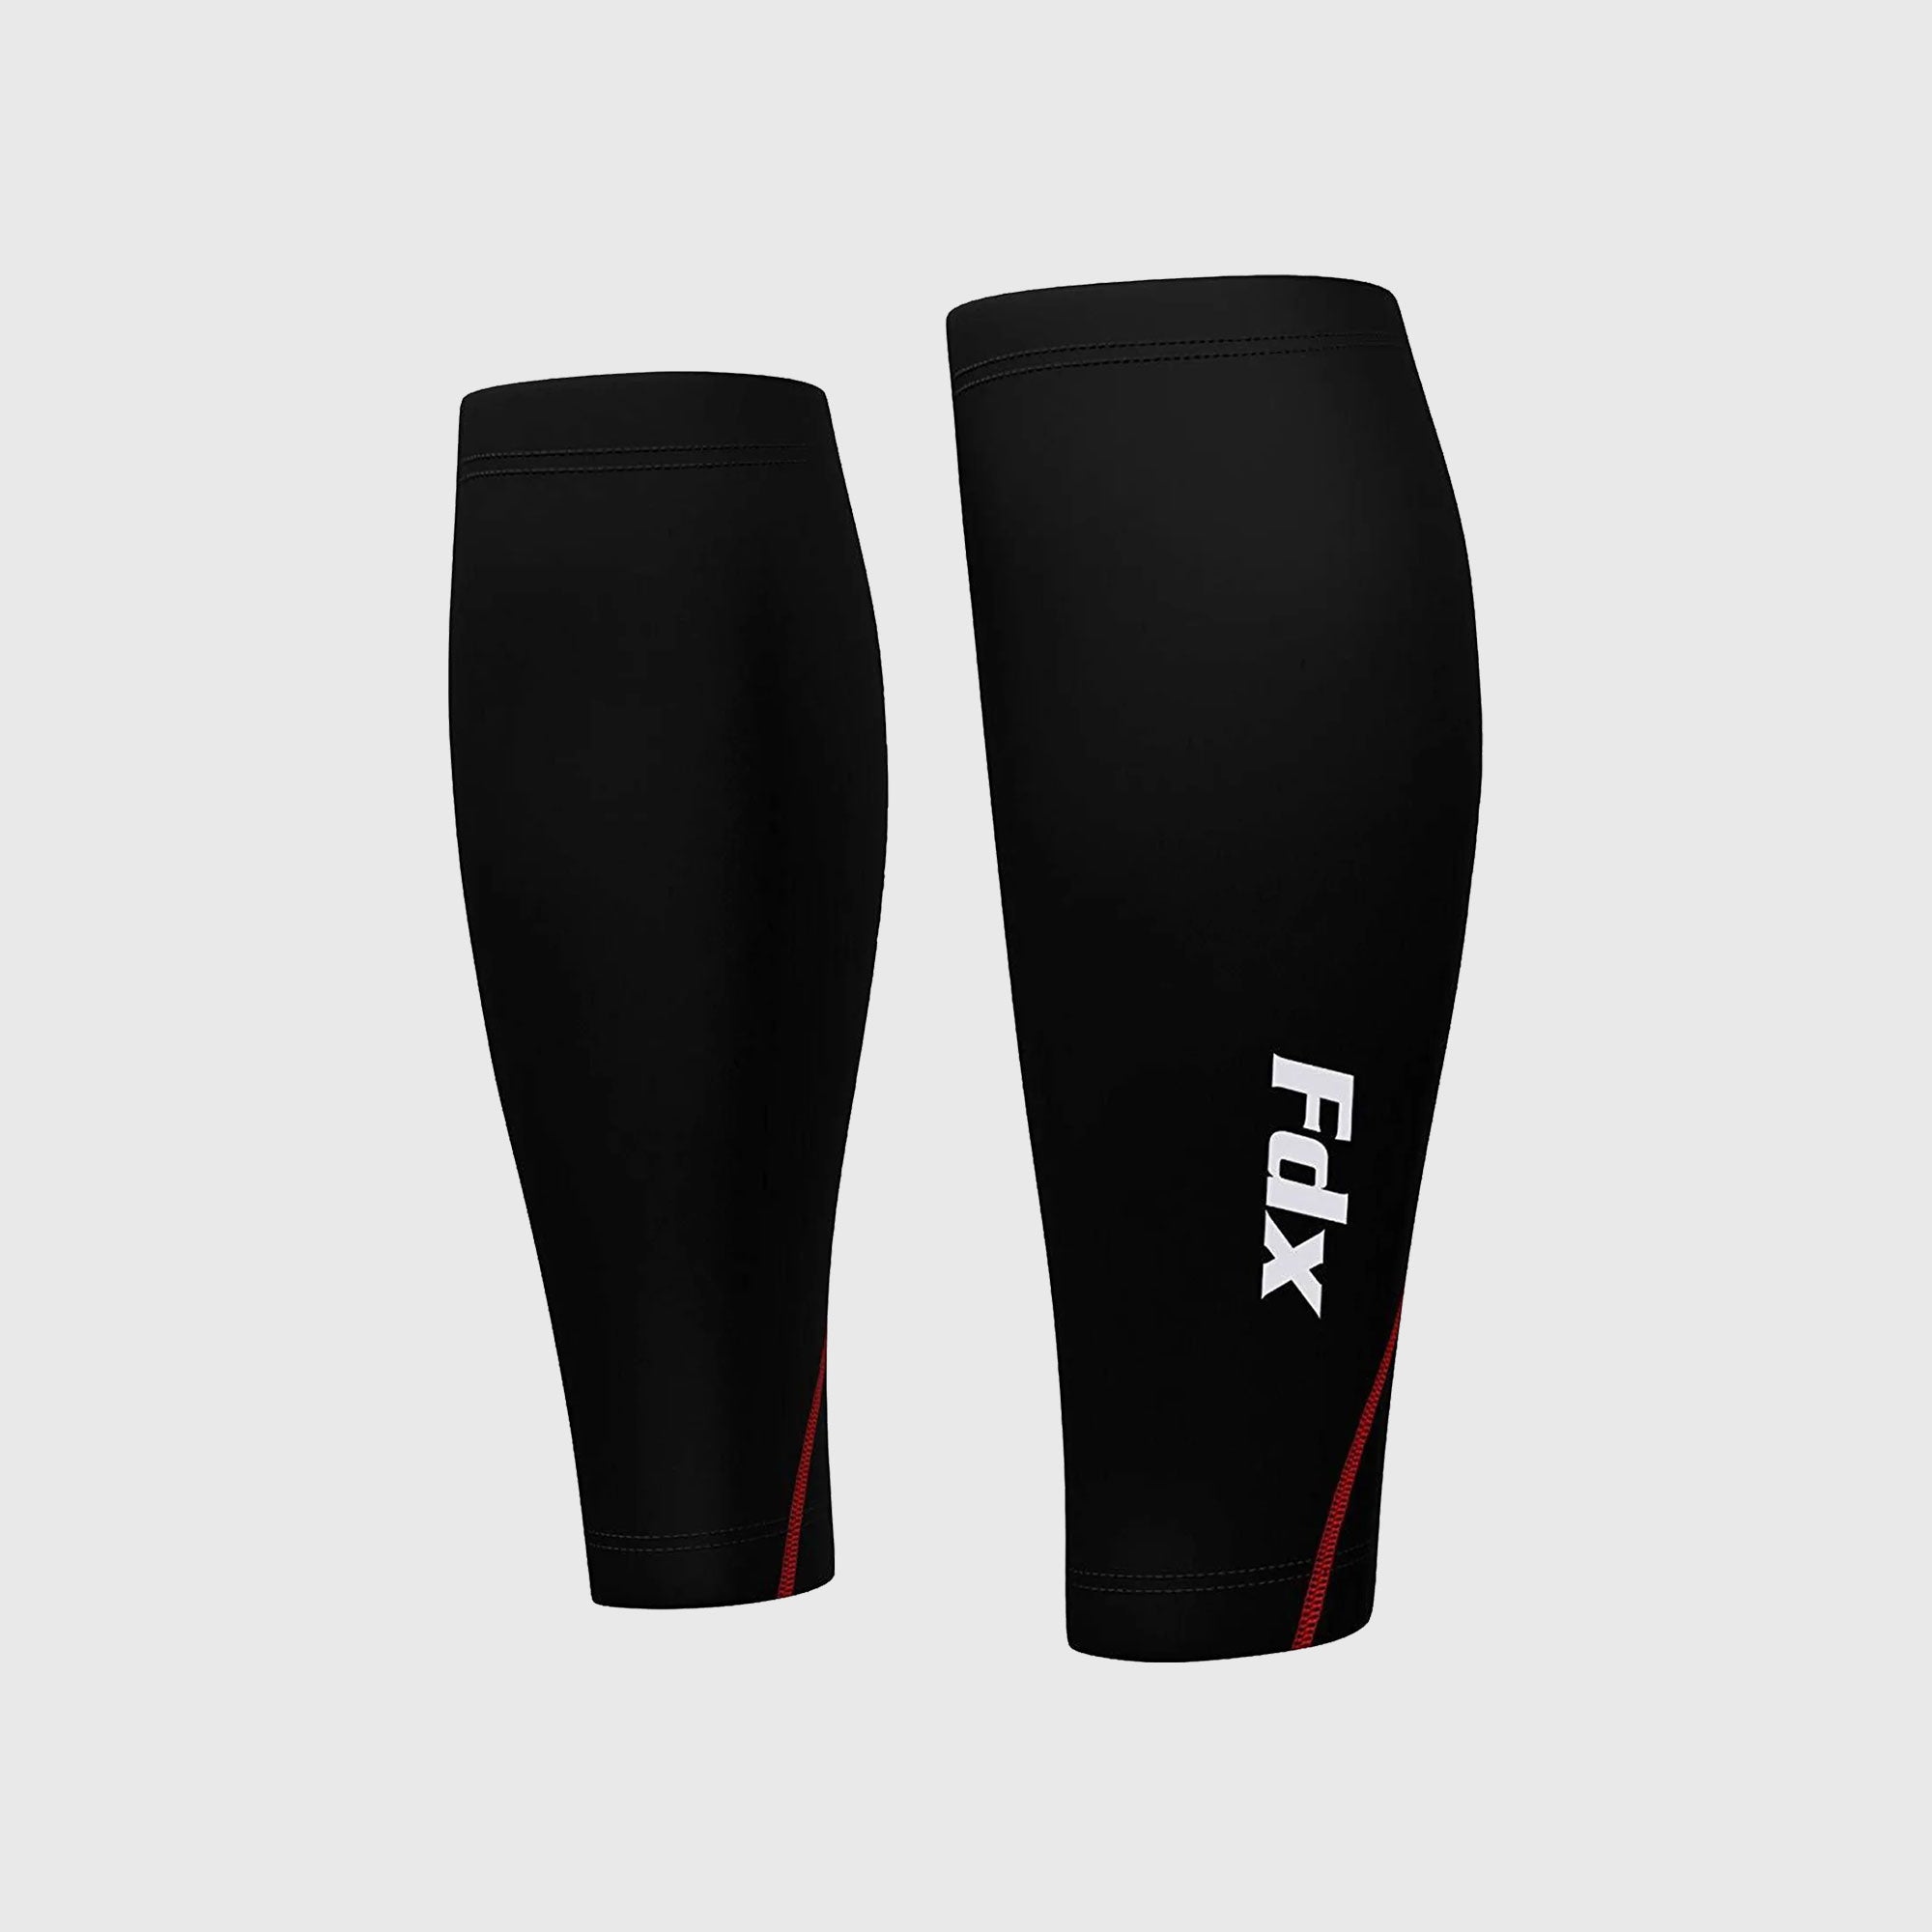 Fdx R8 Black Cycling Calf Guard - Compression Leg Sleeves